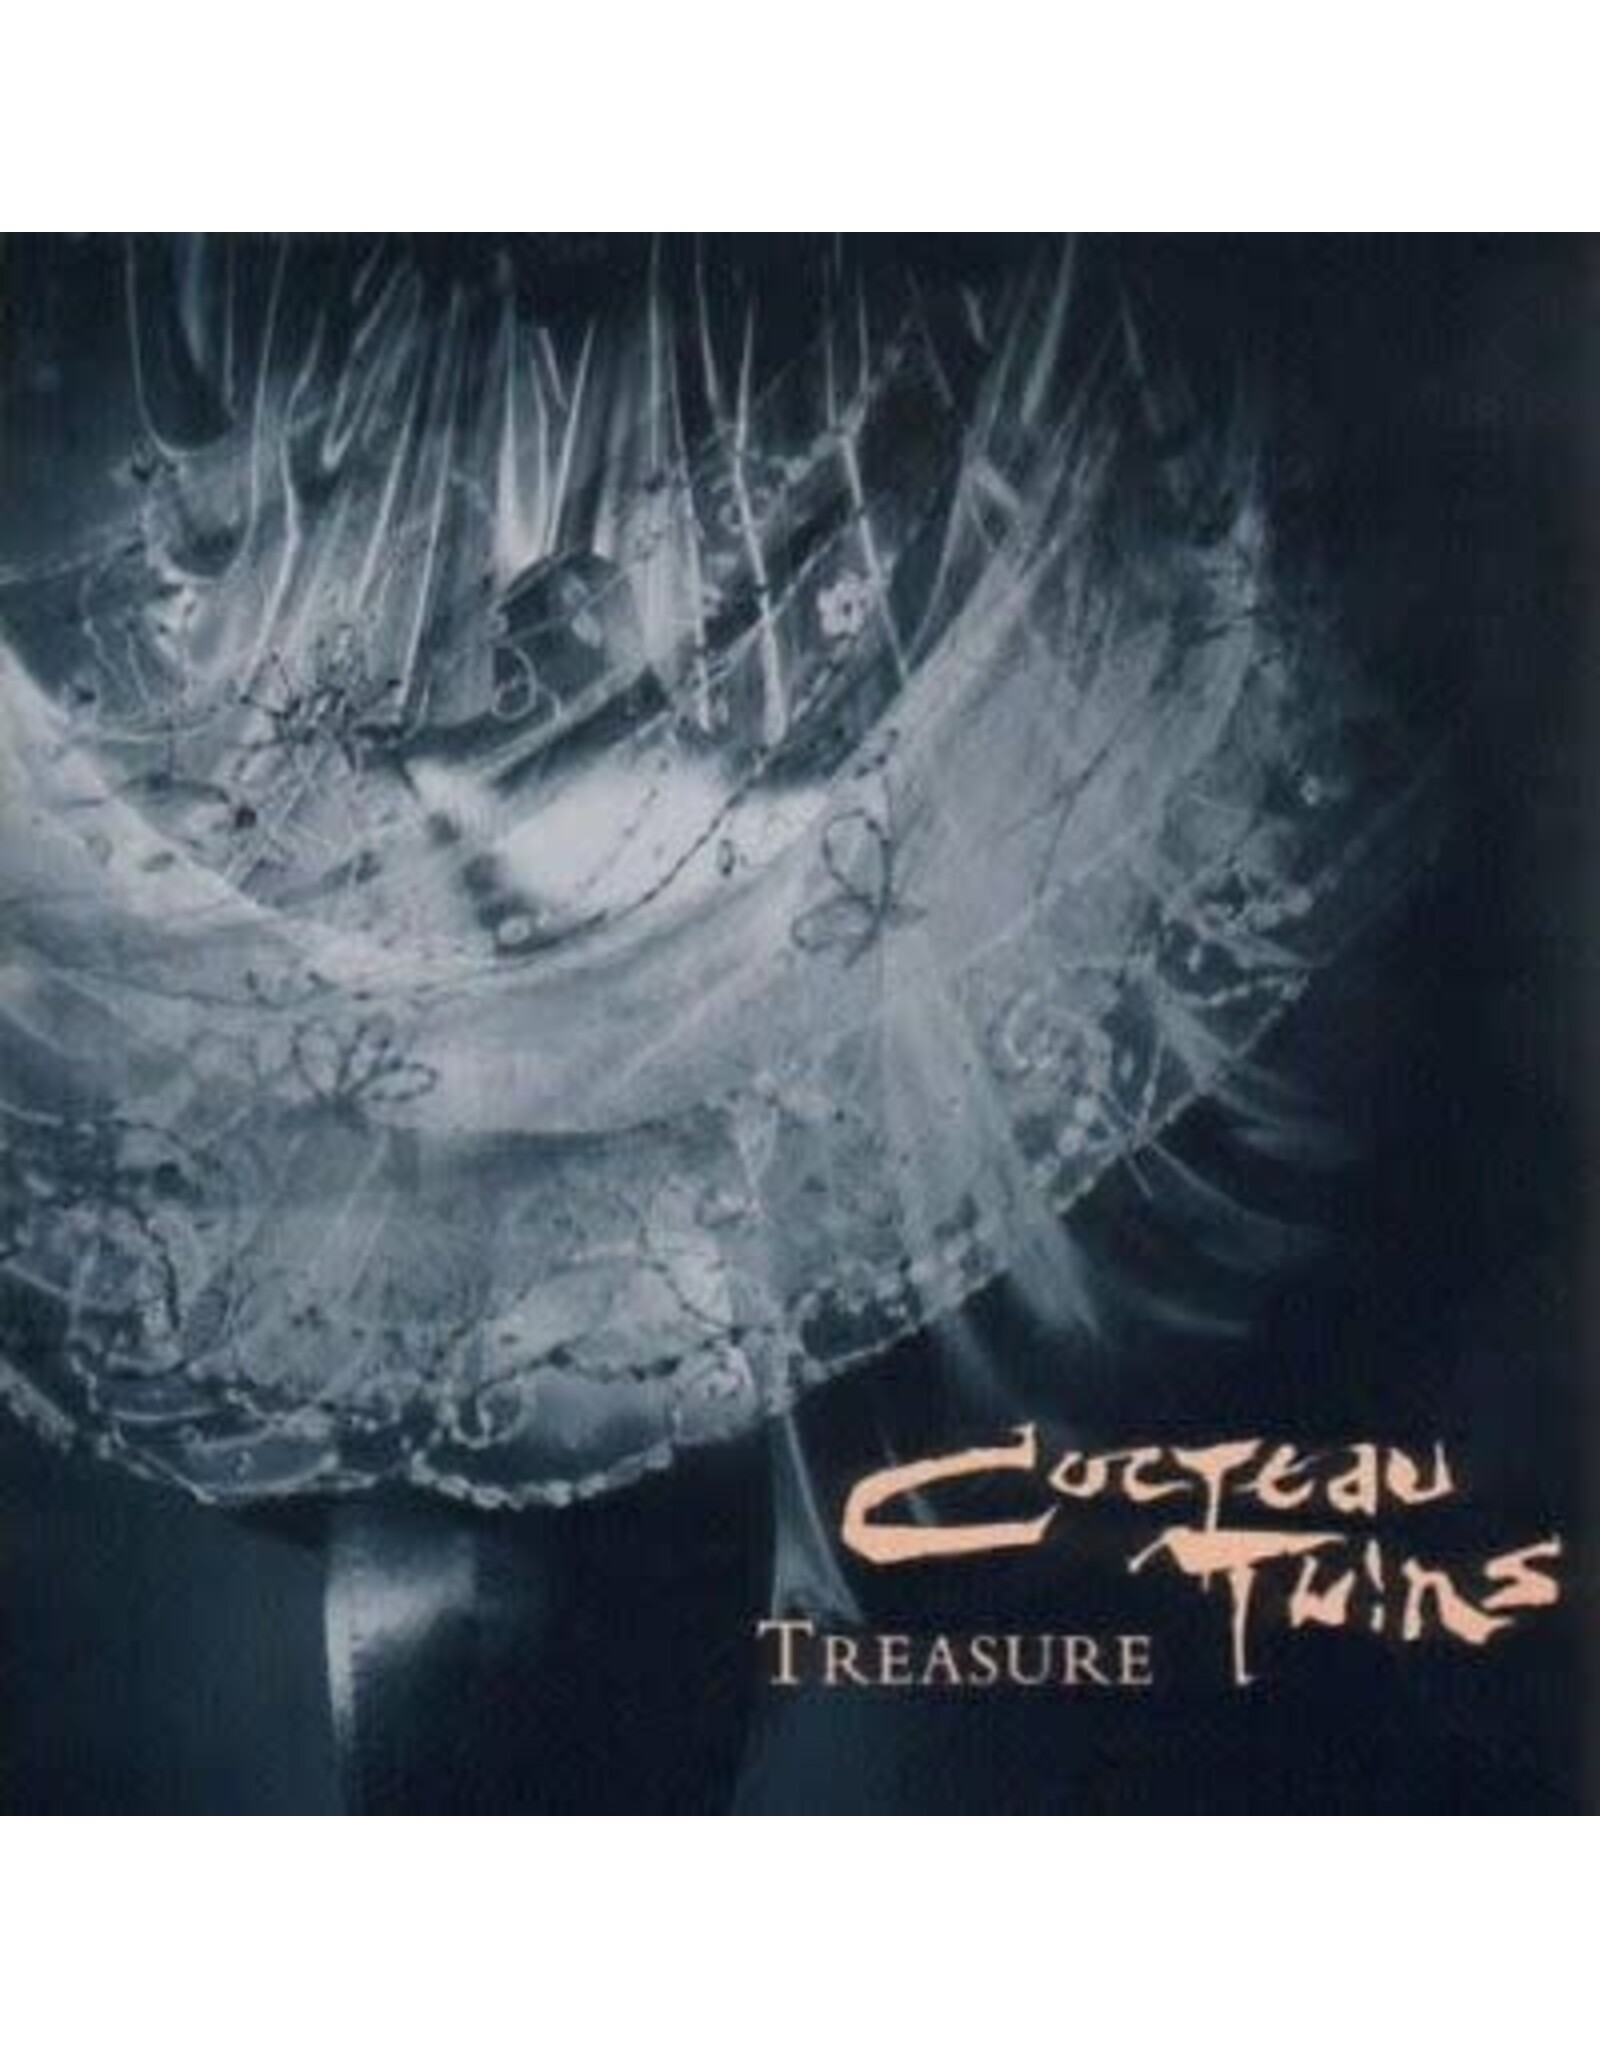 Cocteau Twins - Treasure (Remastered) CD